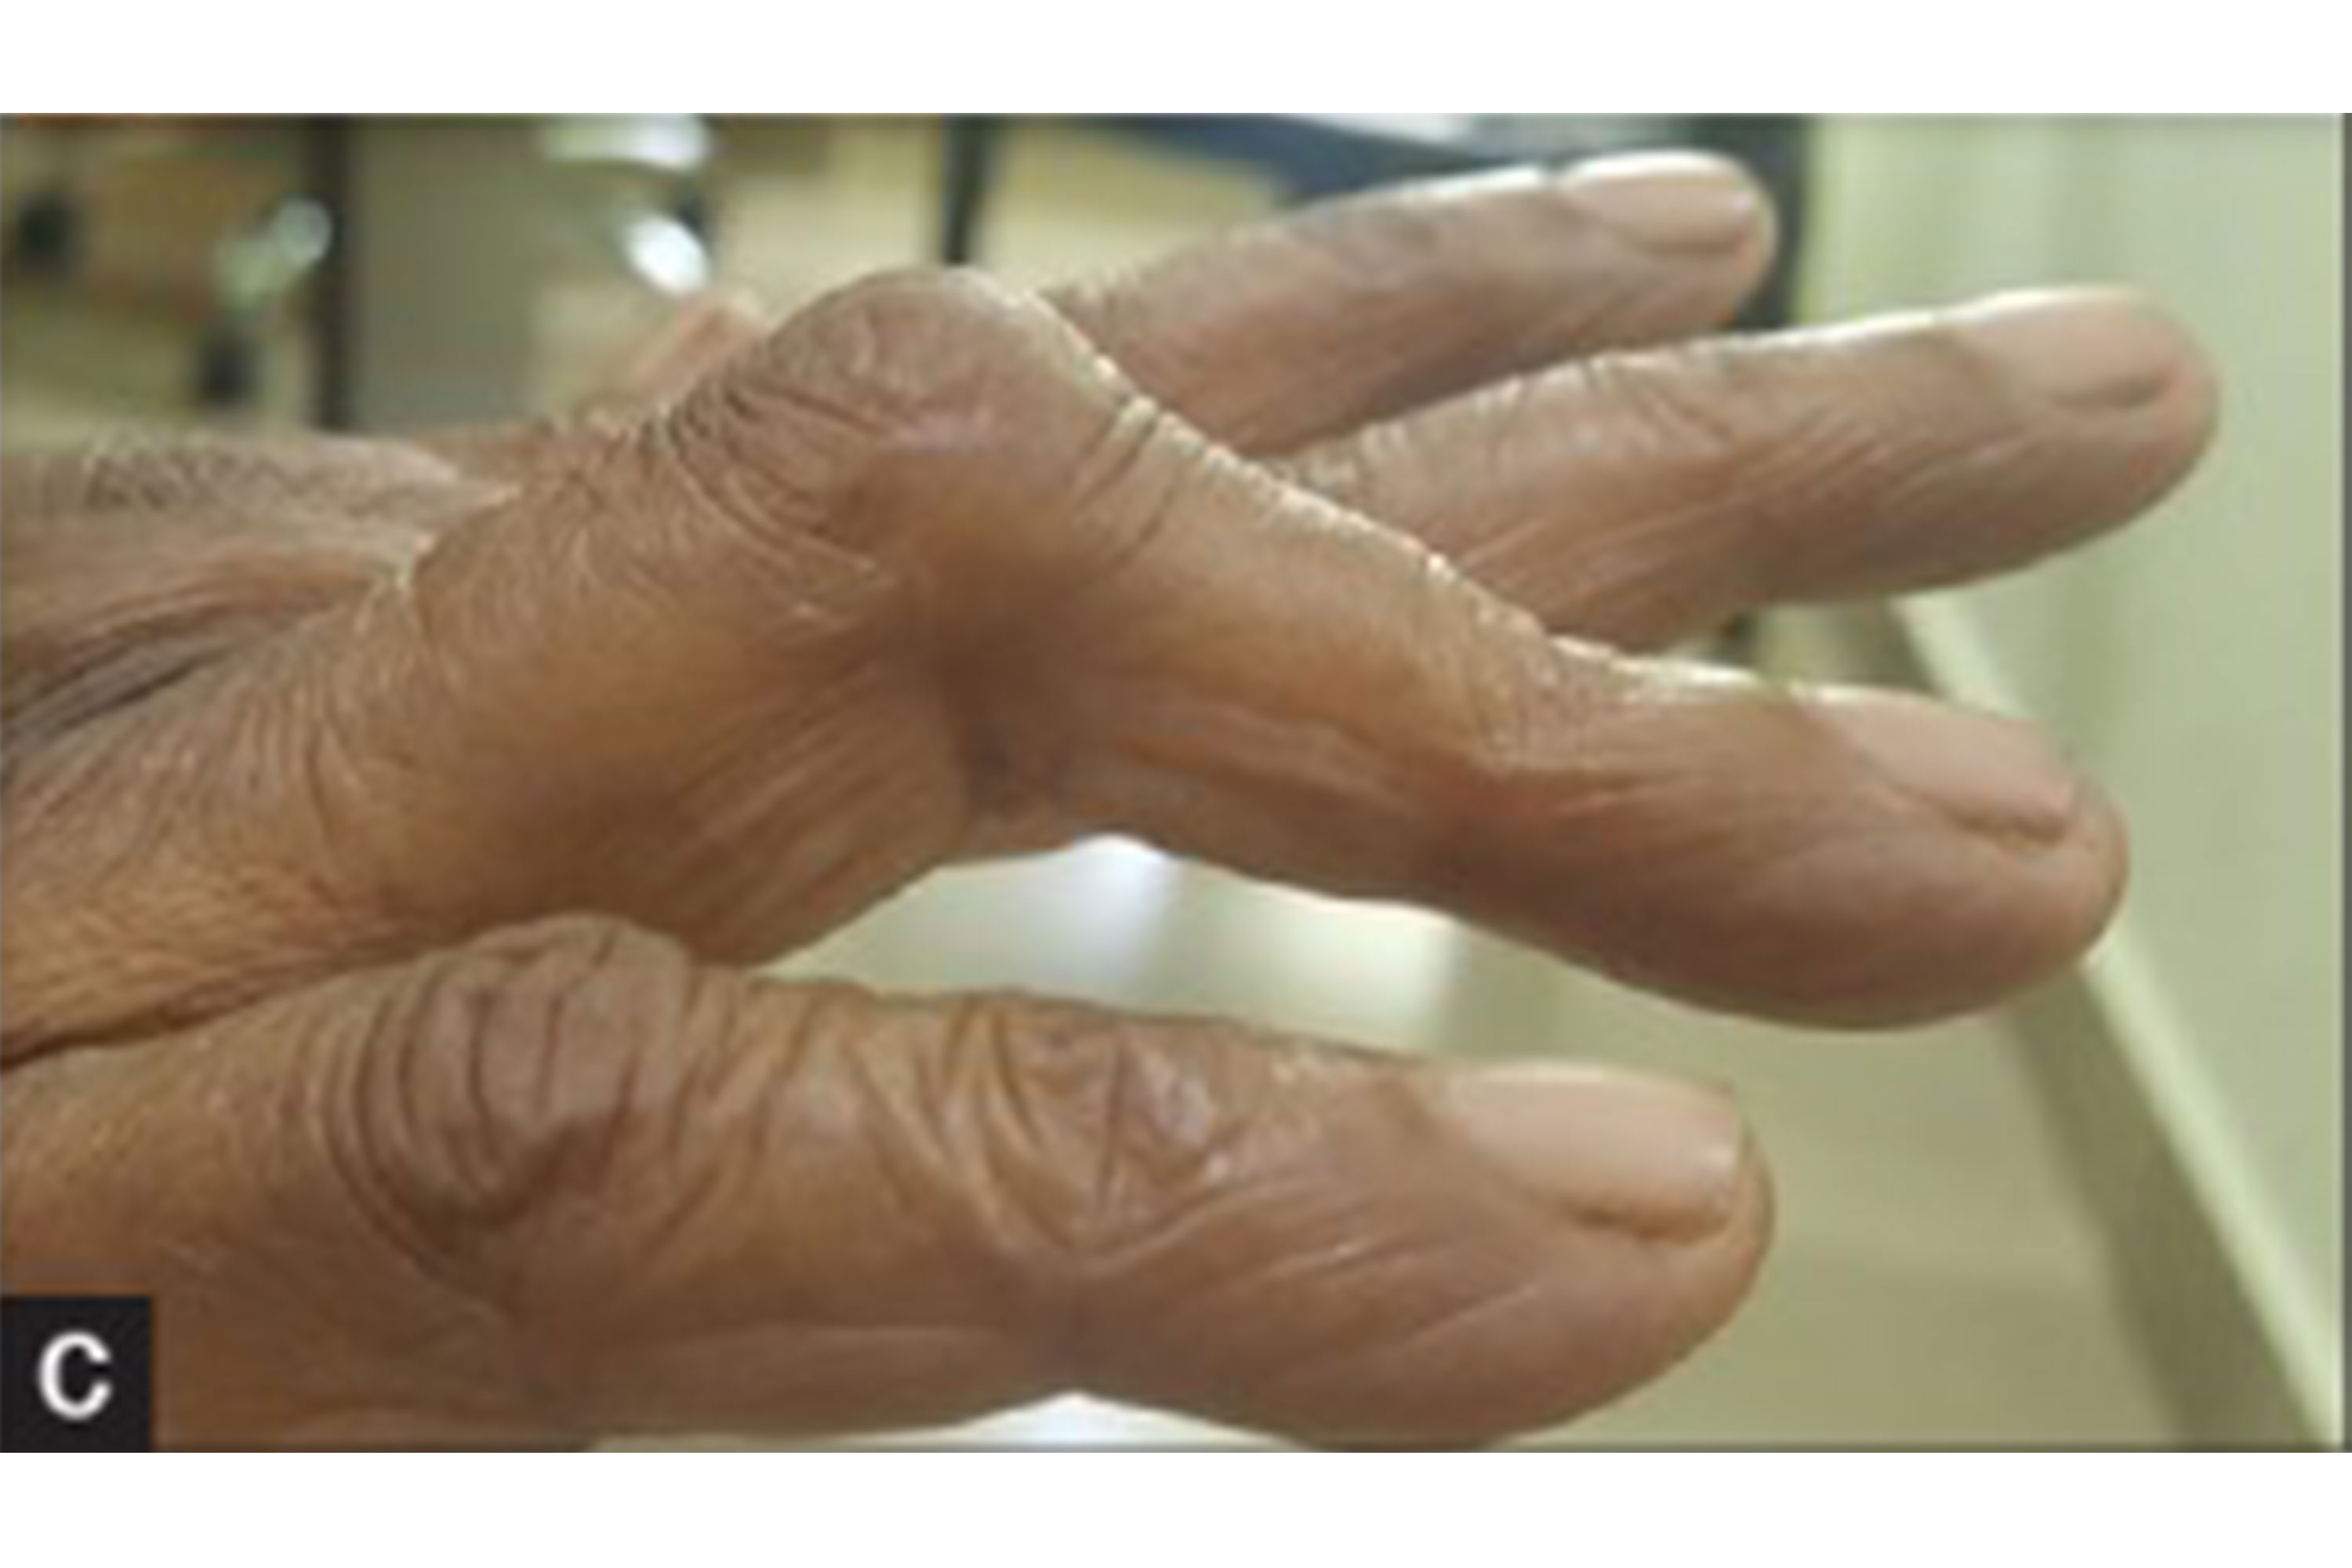 rheumatoid arthritis thumb